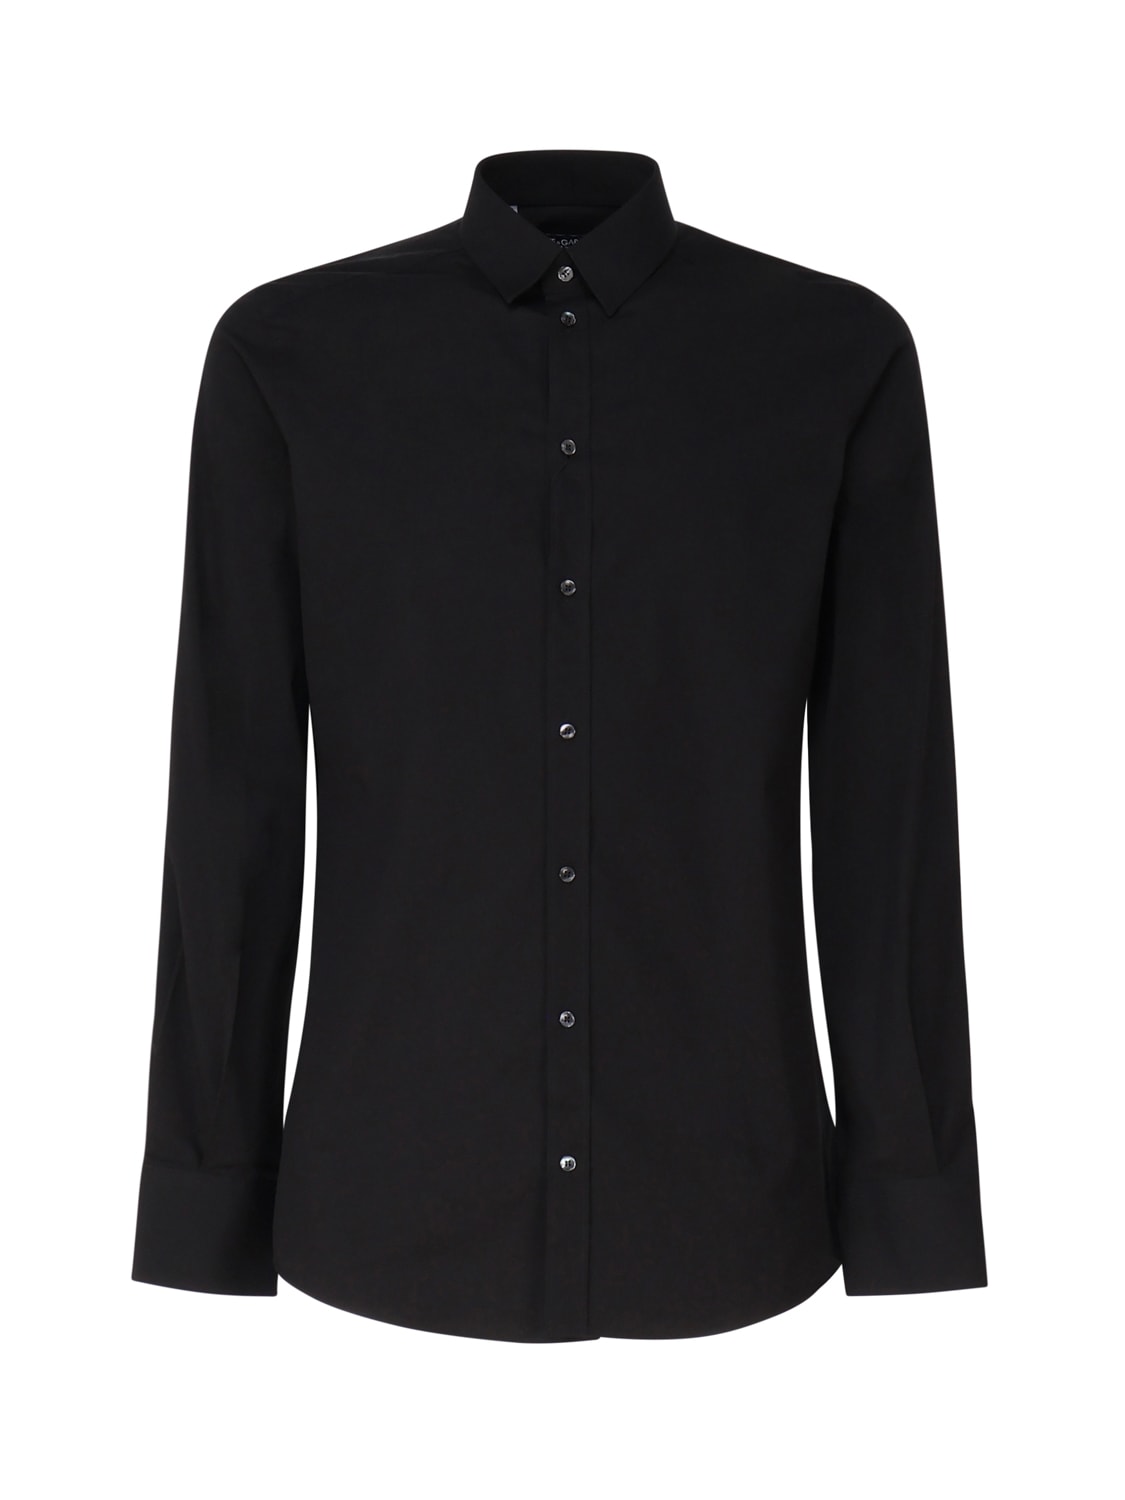 Dolce & Gabbana Shirt Made Of Stretch Cotton Poplin In Black